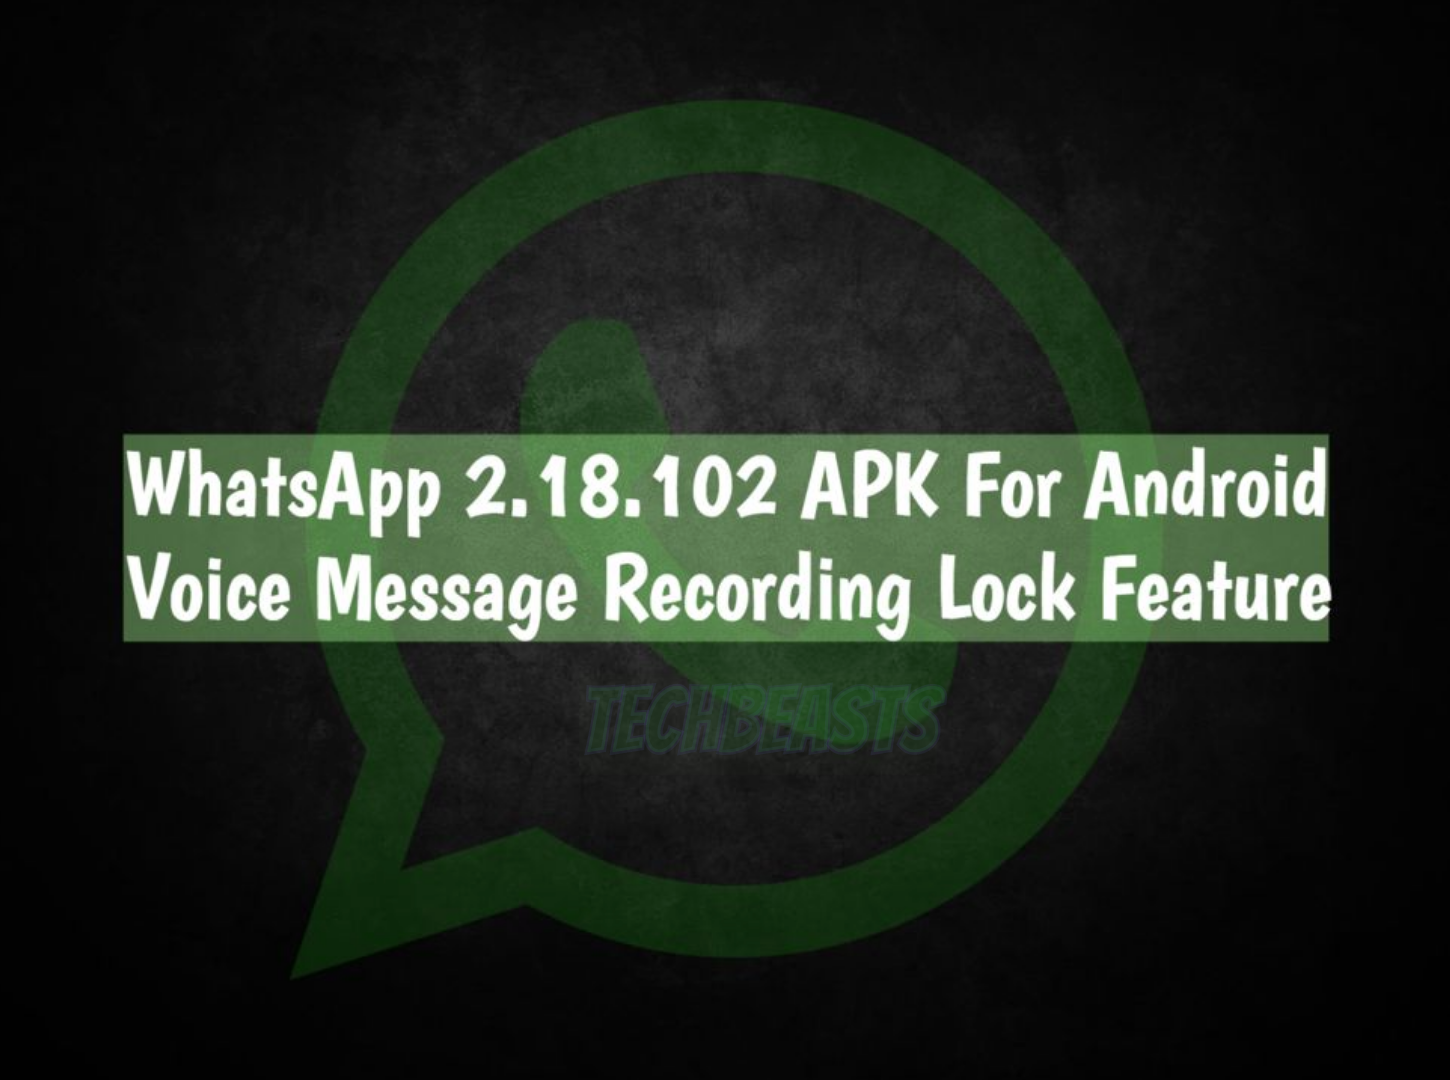 WhatsApp 2.18.102 APK